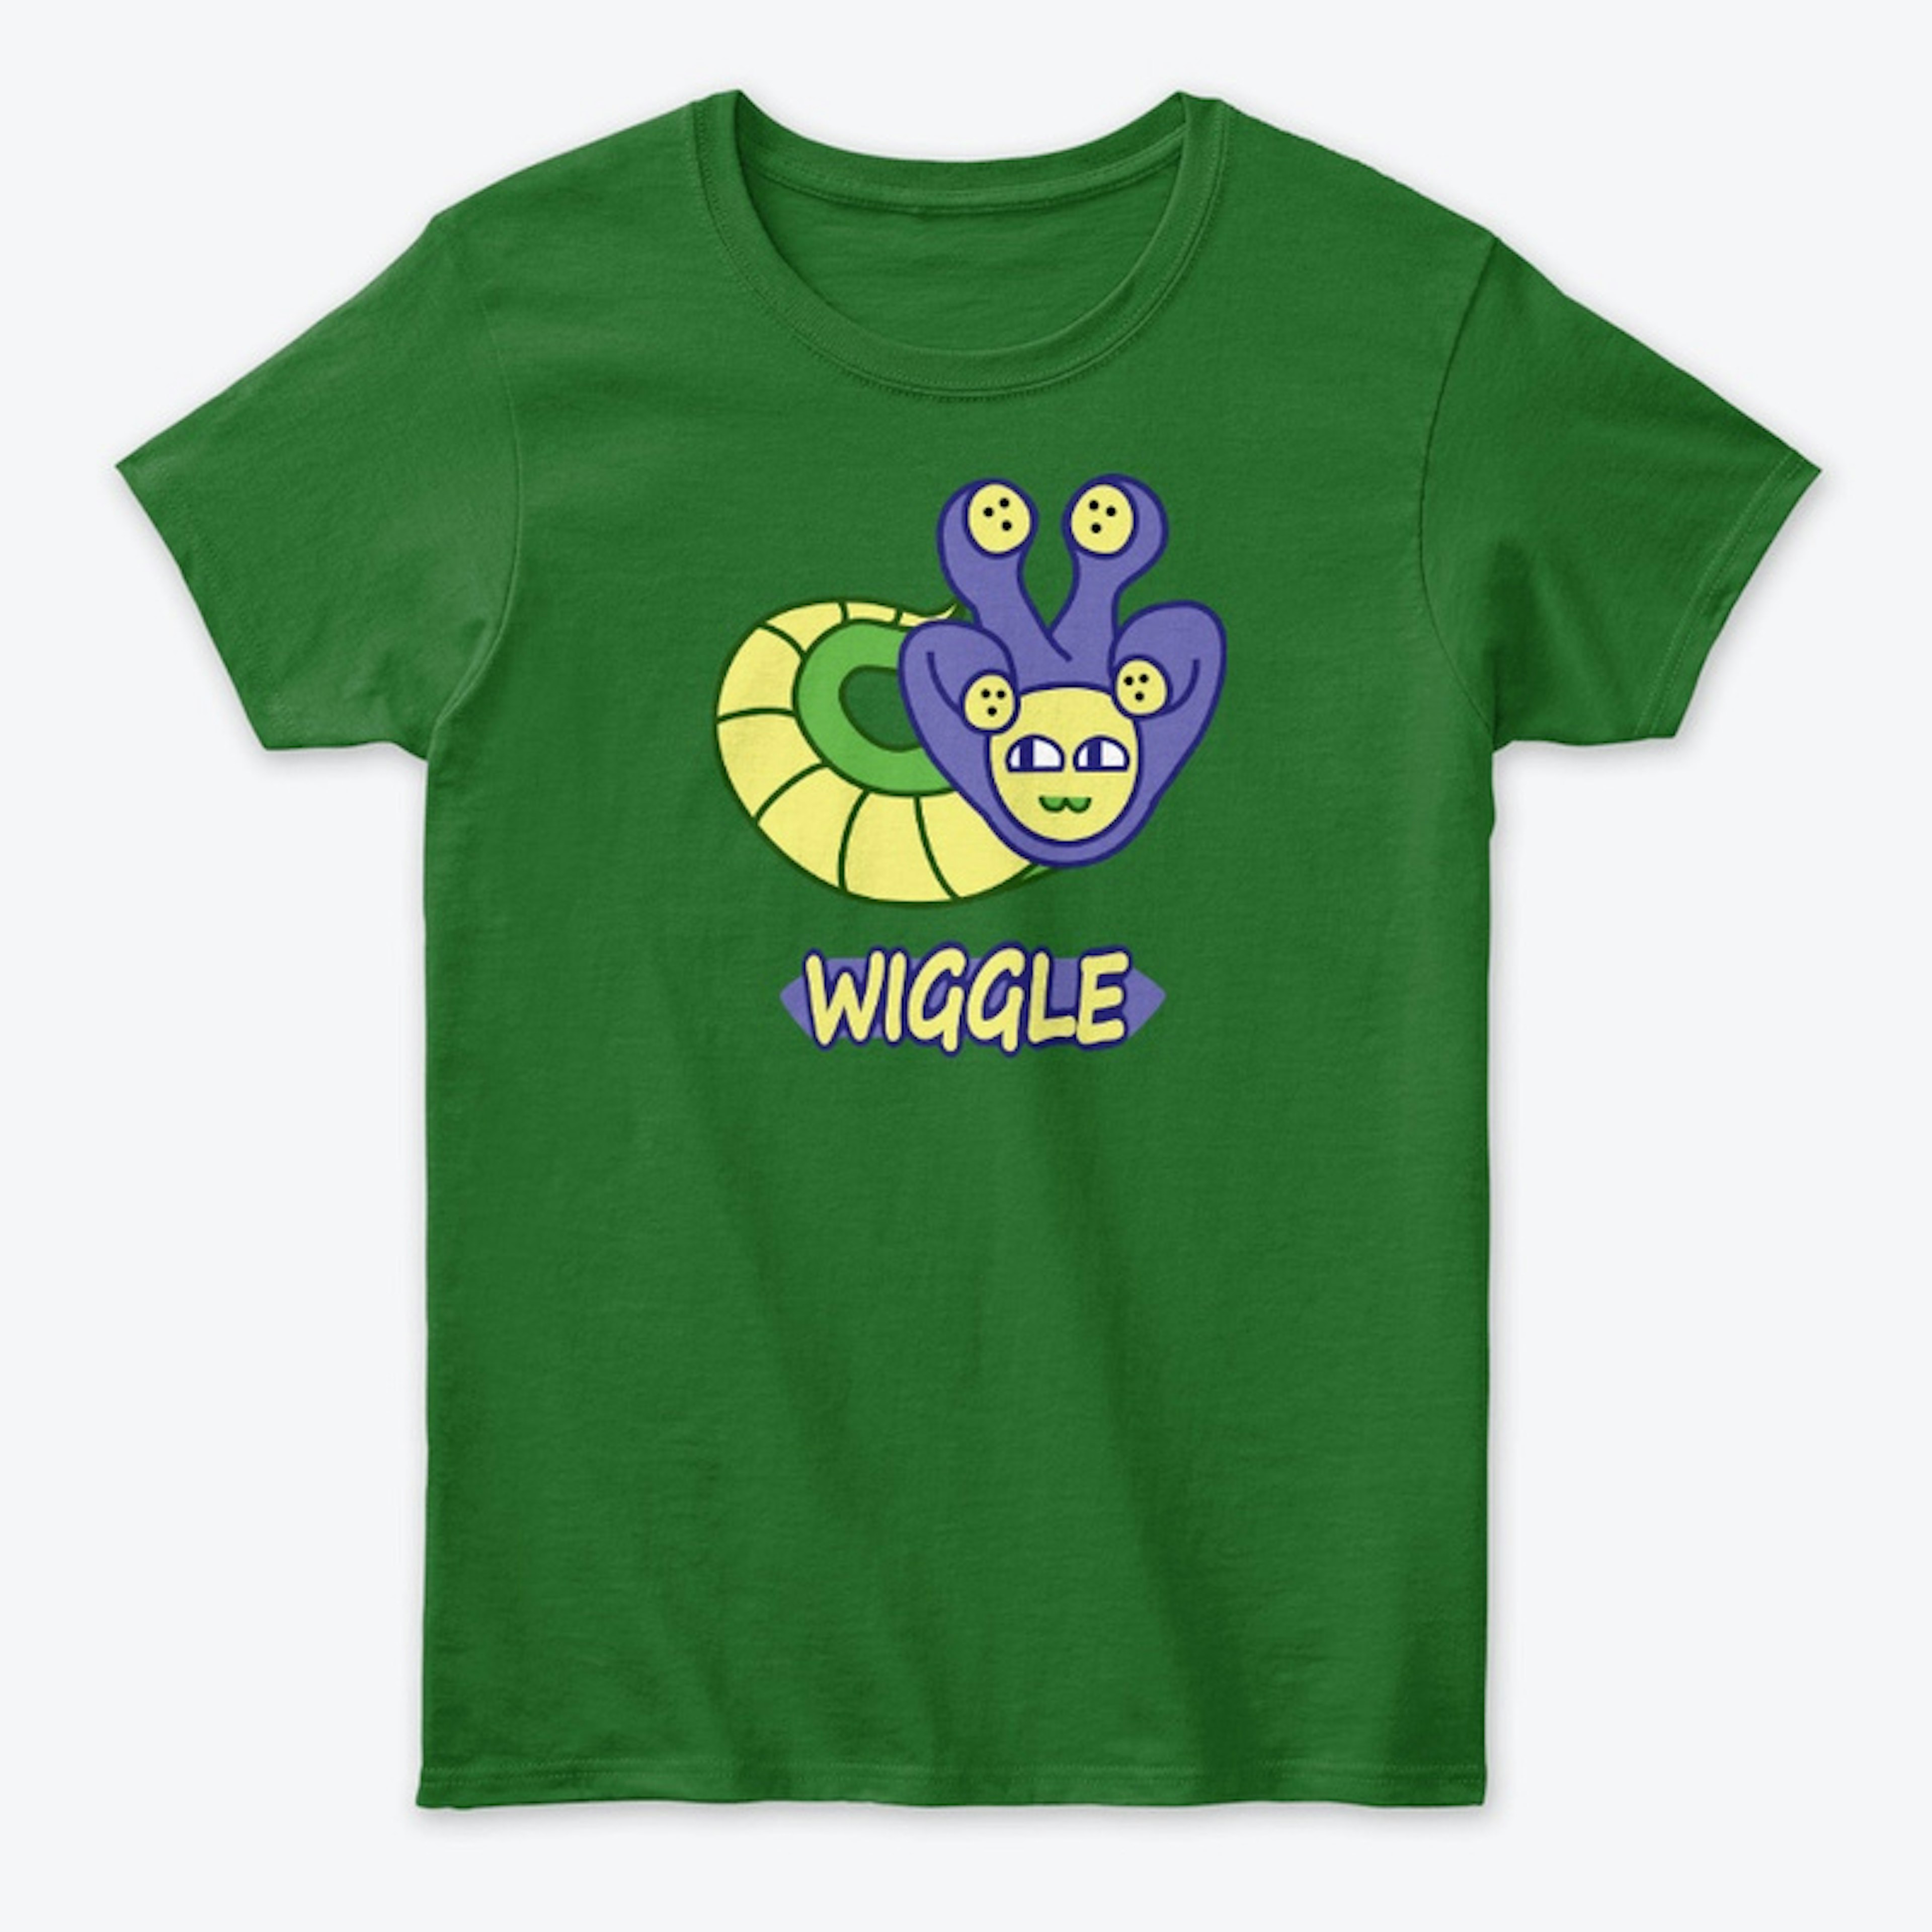 Wiggle shirt